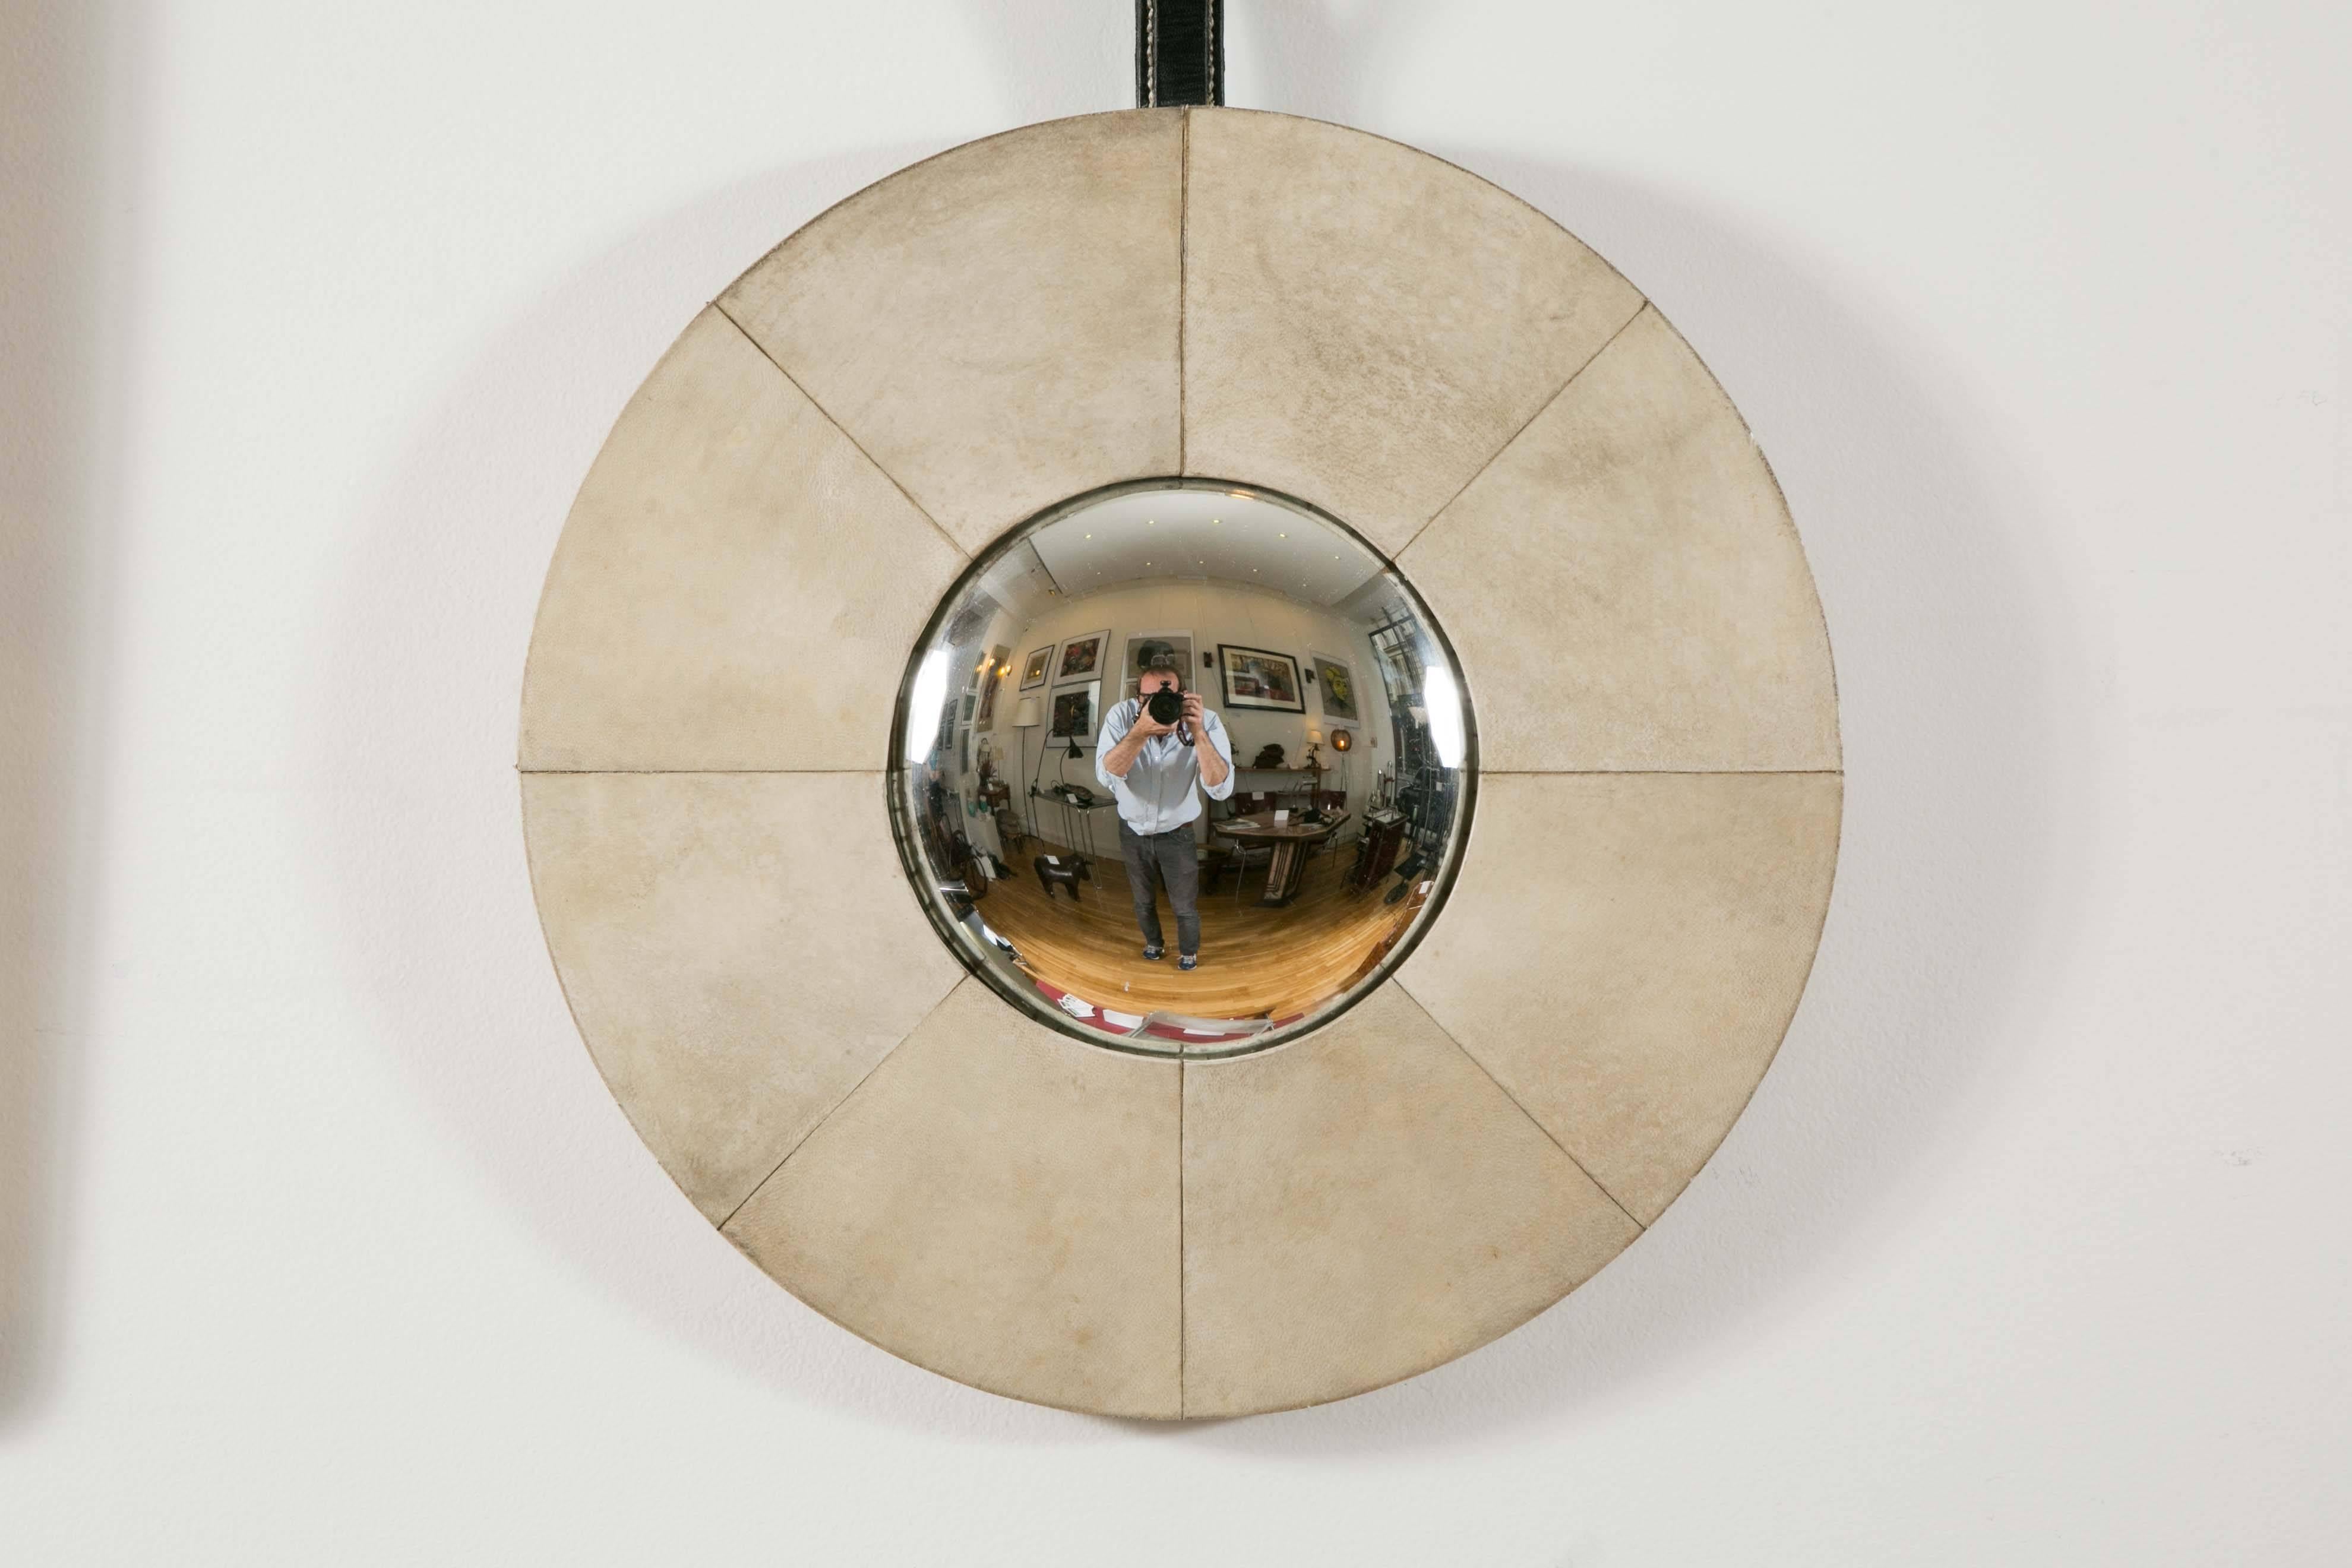 Eccentric mirror (also known as convex mirror or witch mirror - 